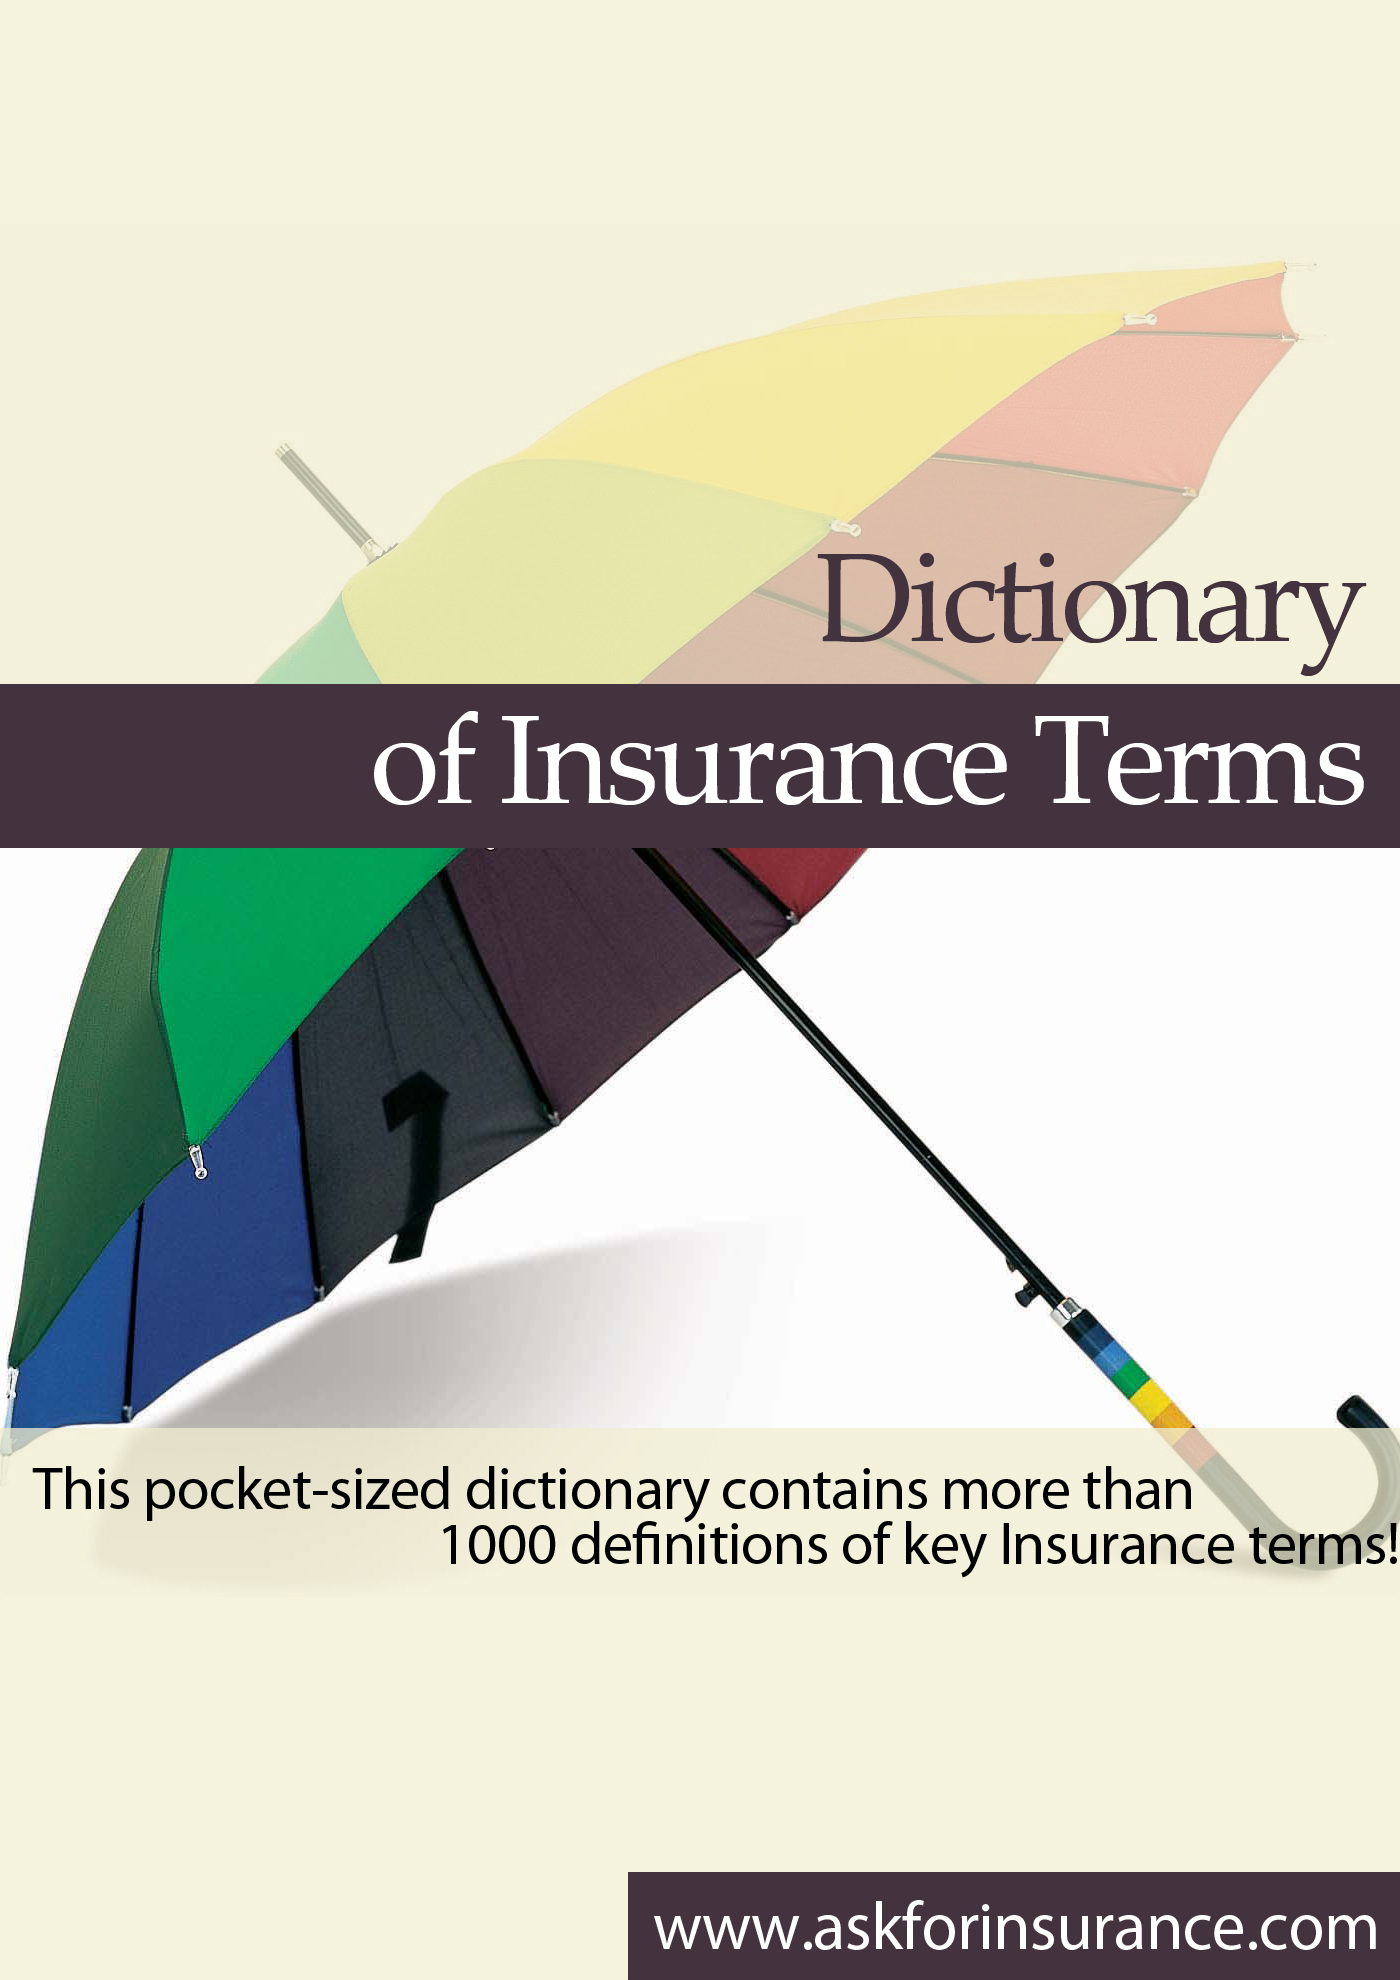 Insurance Dictionary